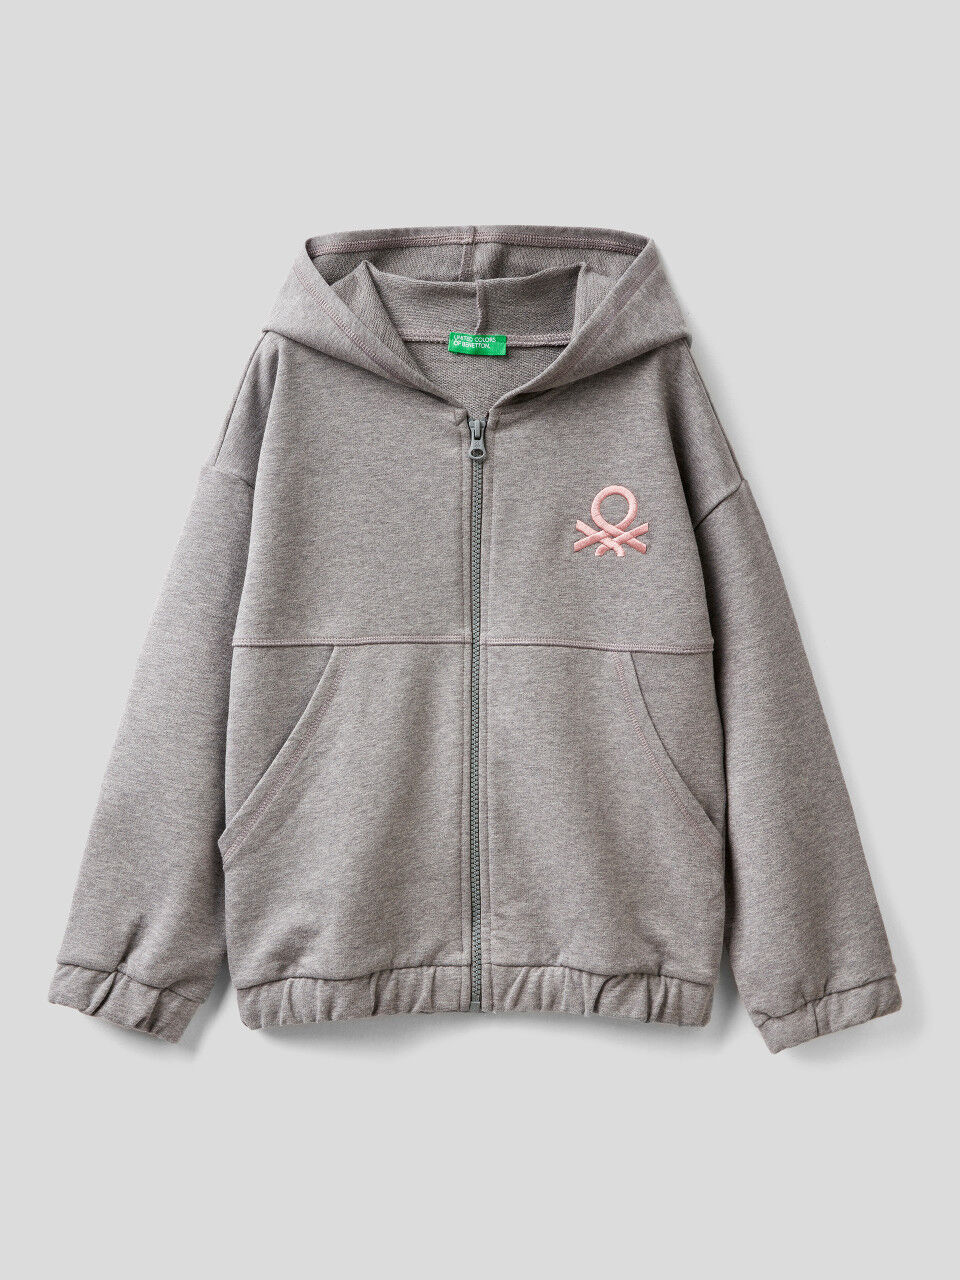 Warm sweatshirt with zip and embroidered logo